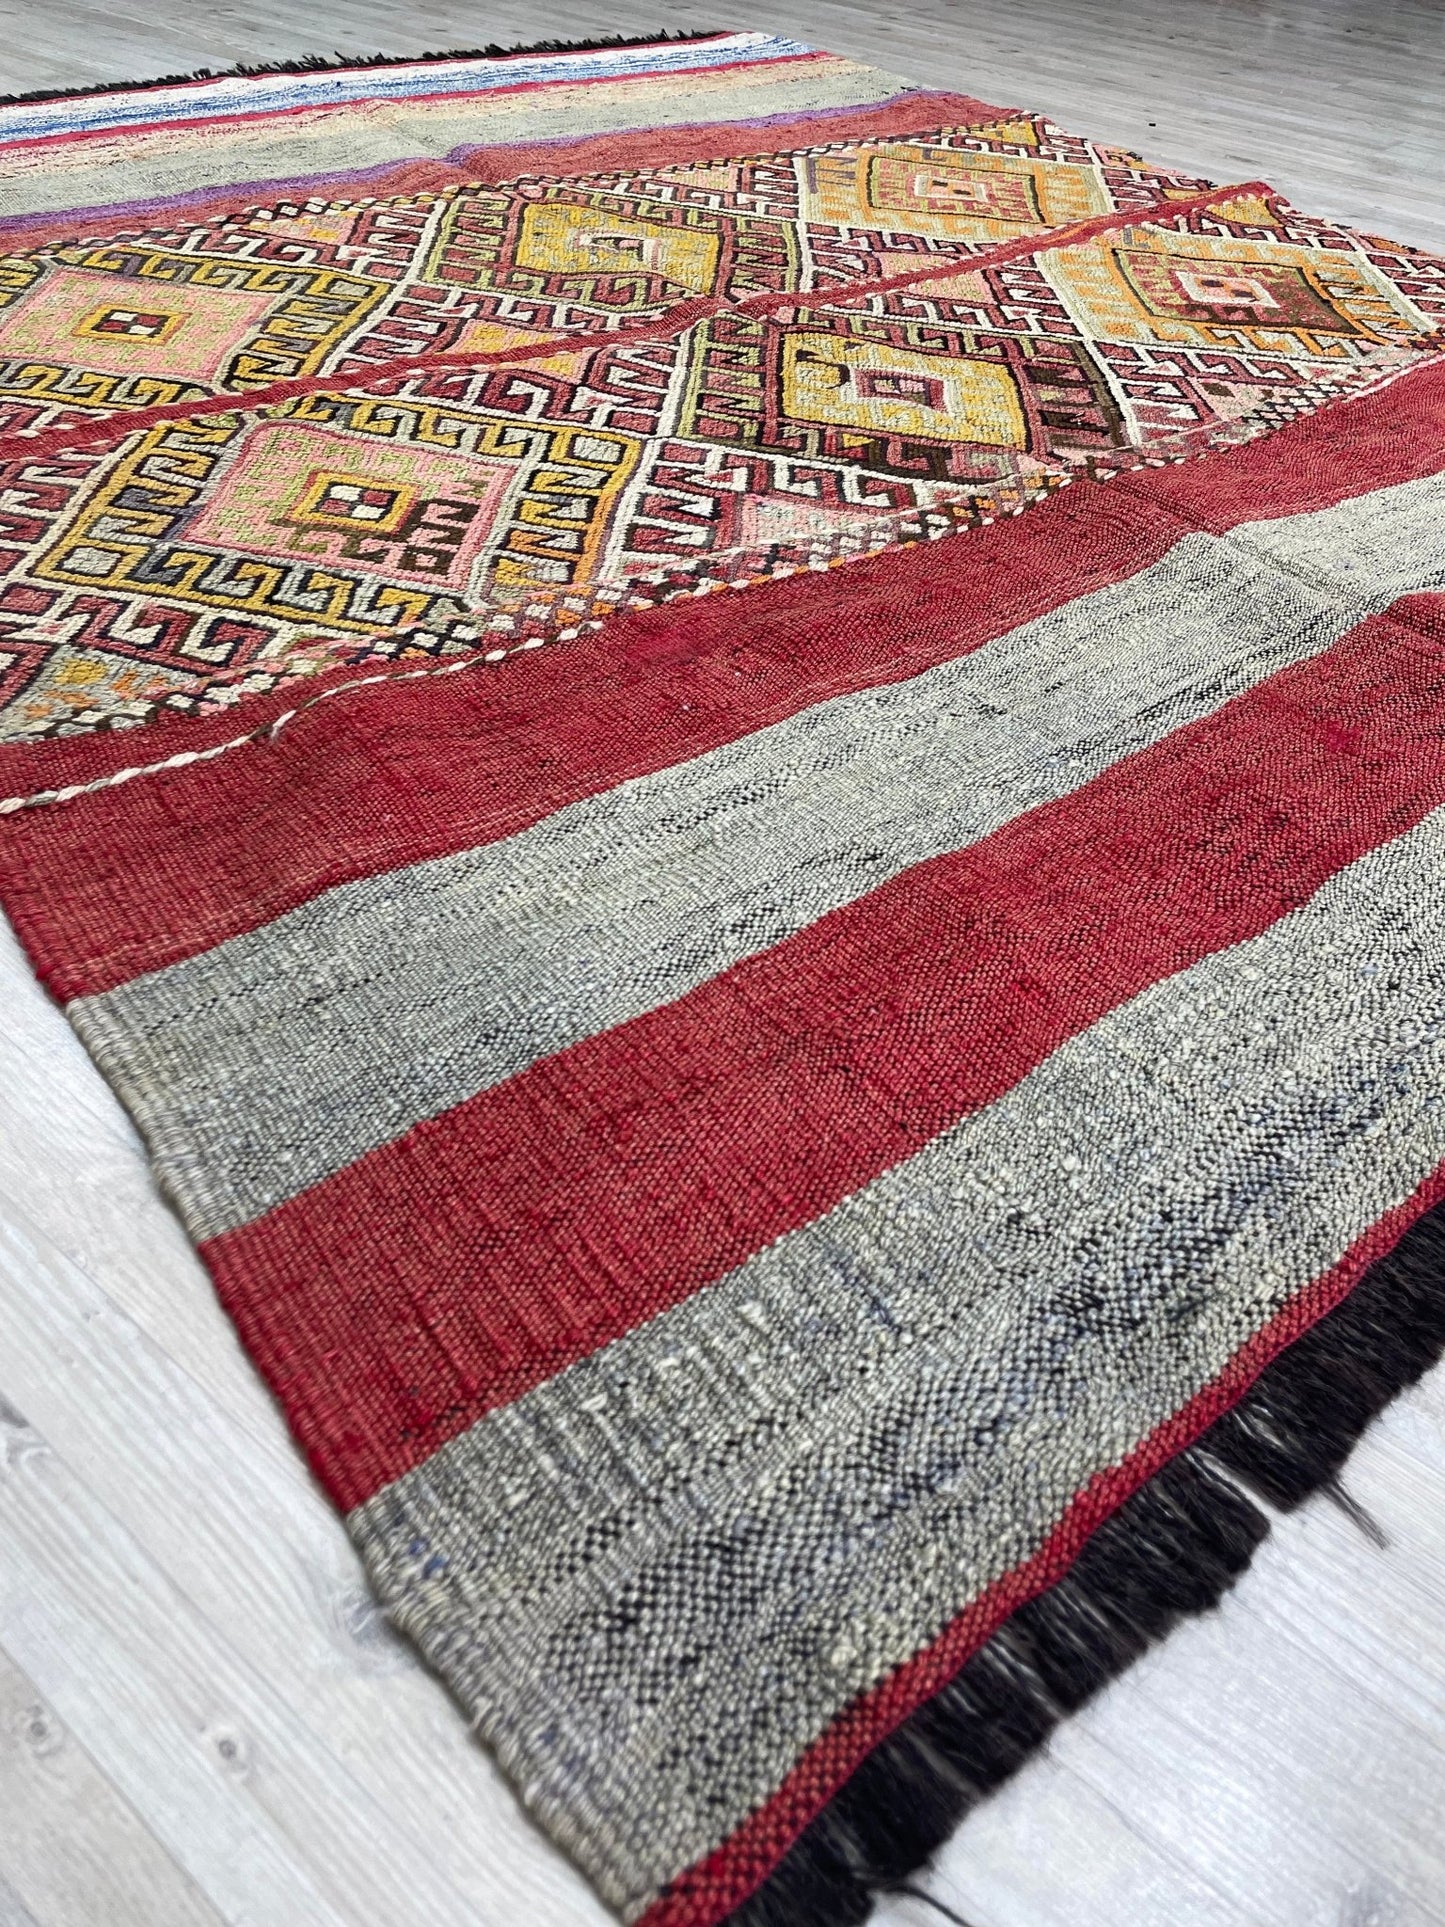 turkish kilim rug shop online rug shopping san francisco bay area palo alto east bay berkeley walnut creek